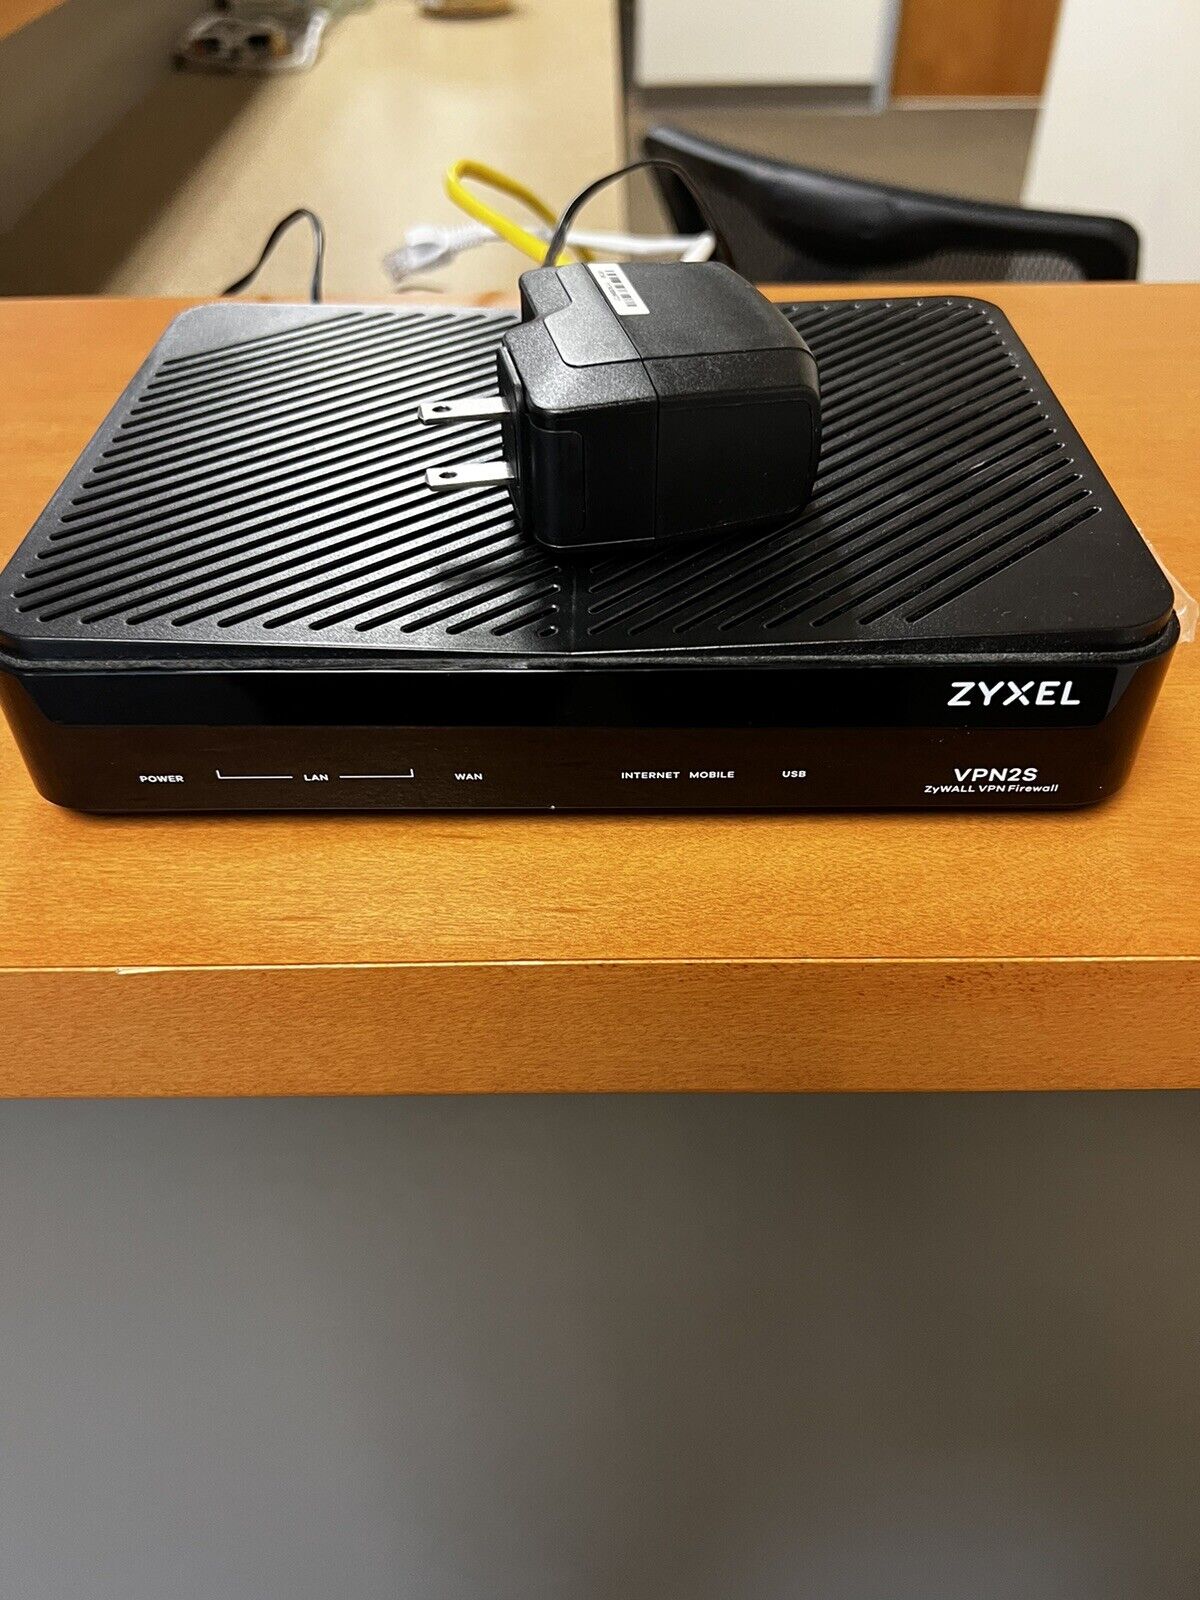 ZYXEL VPN2S - VPN Firewall - Barely Used - Fully Functional